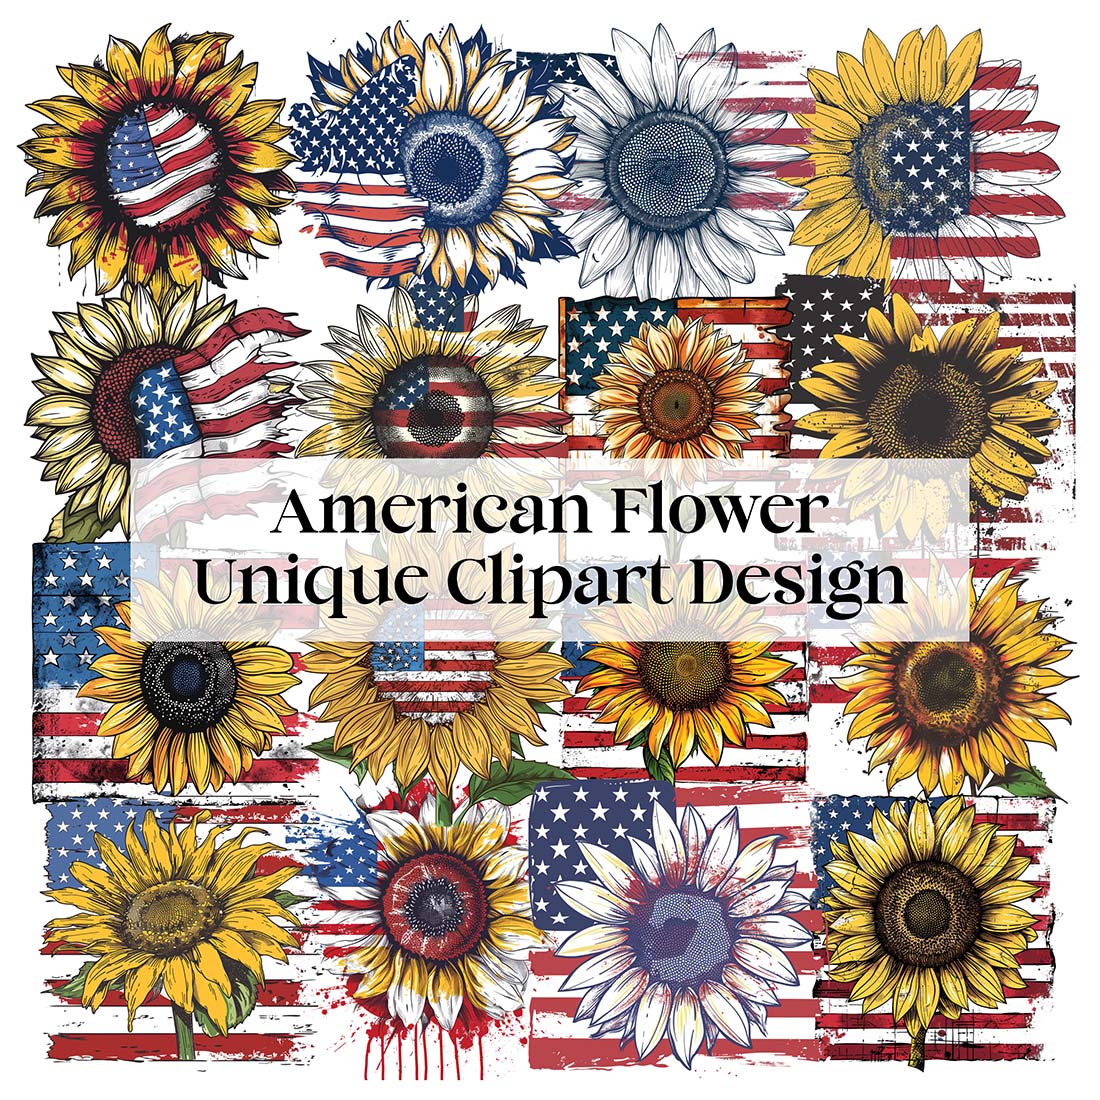 American Flower Unique Clipart Design cover image.